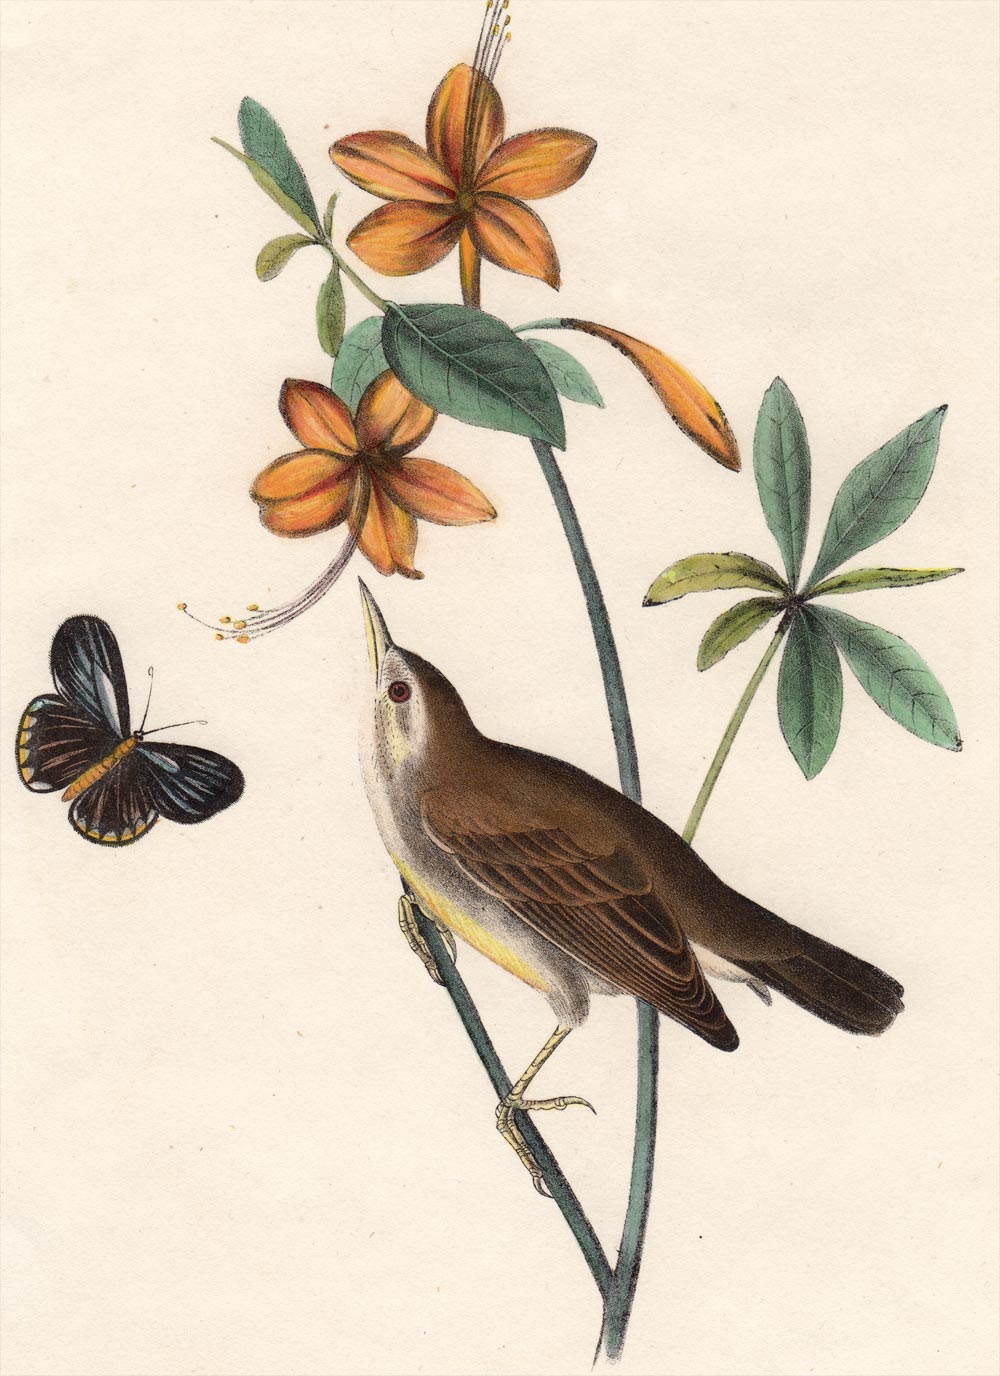 Audubon First Edition Octavo Print for sale Pl 104 Swainson's Swamp Warbler, detail